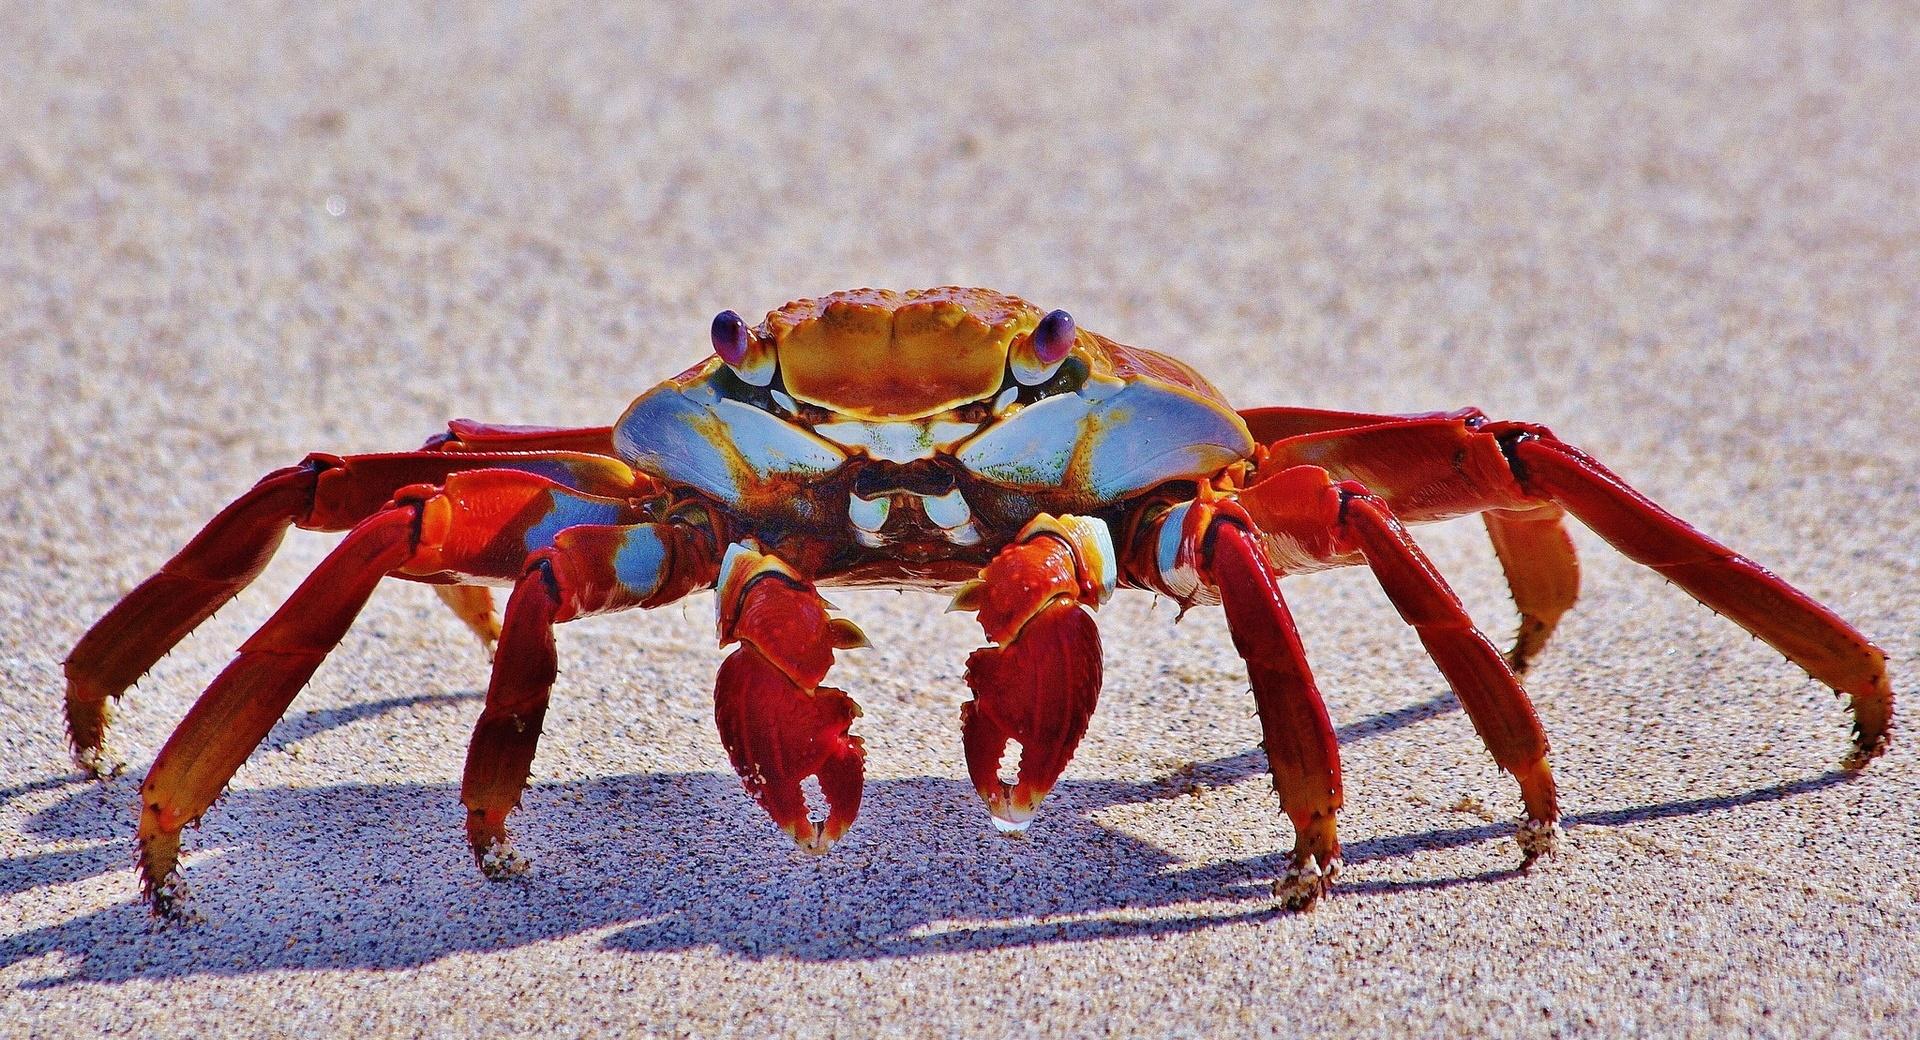 Big Red Crab Macro at 2048 x 2048 iPad size wallpapers HD quality